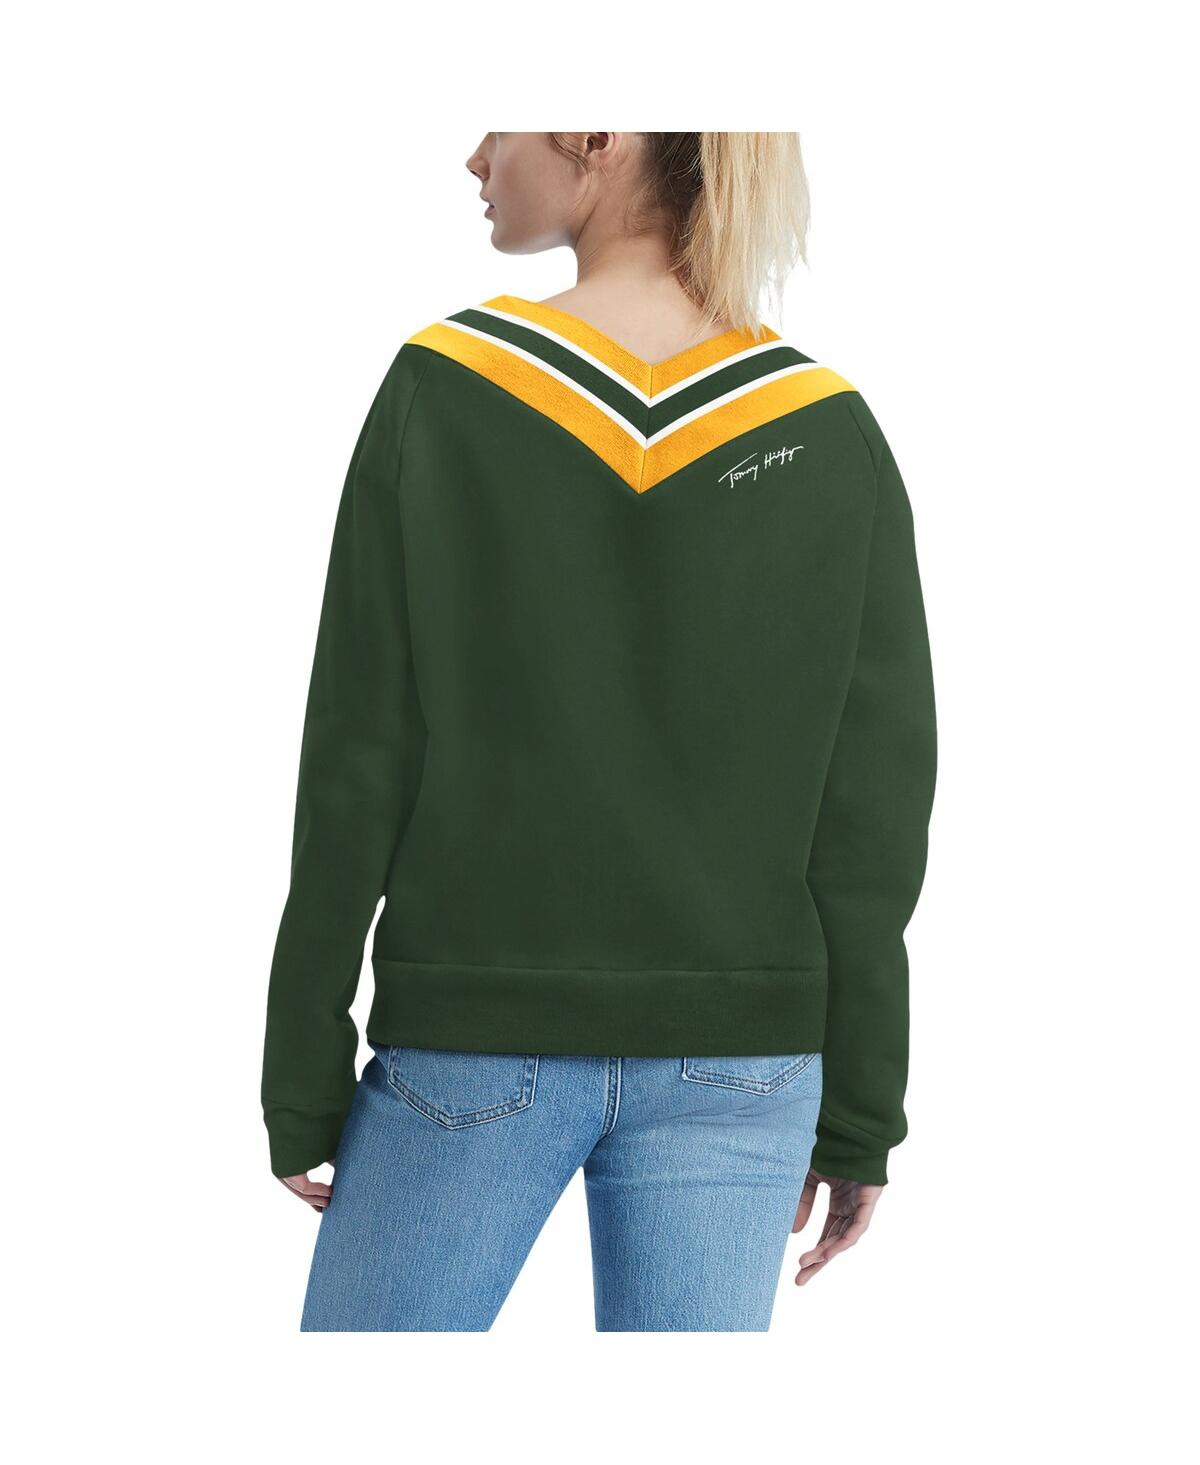 Shop Tommy Hilfiger Women's  Green Green Bay Packers Heidi Raglan V-neck Sweater